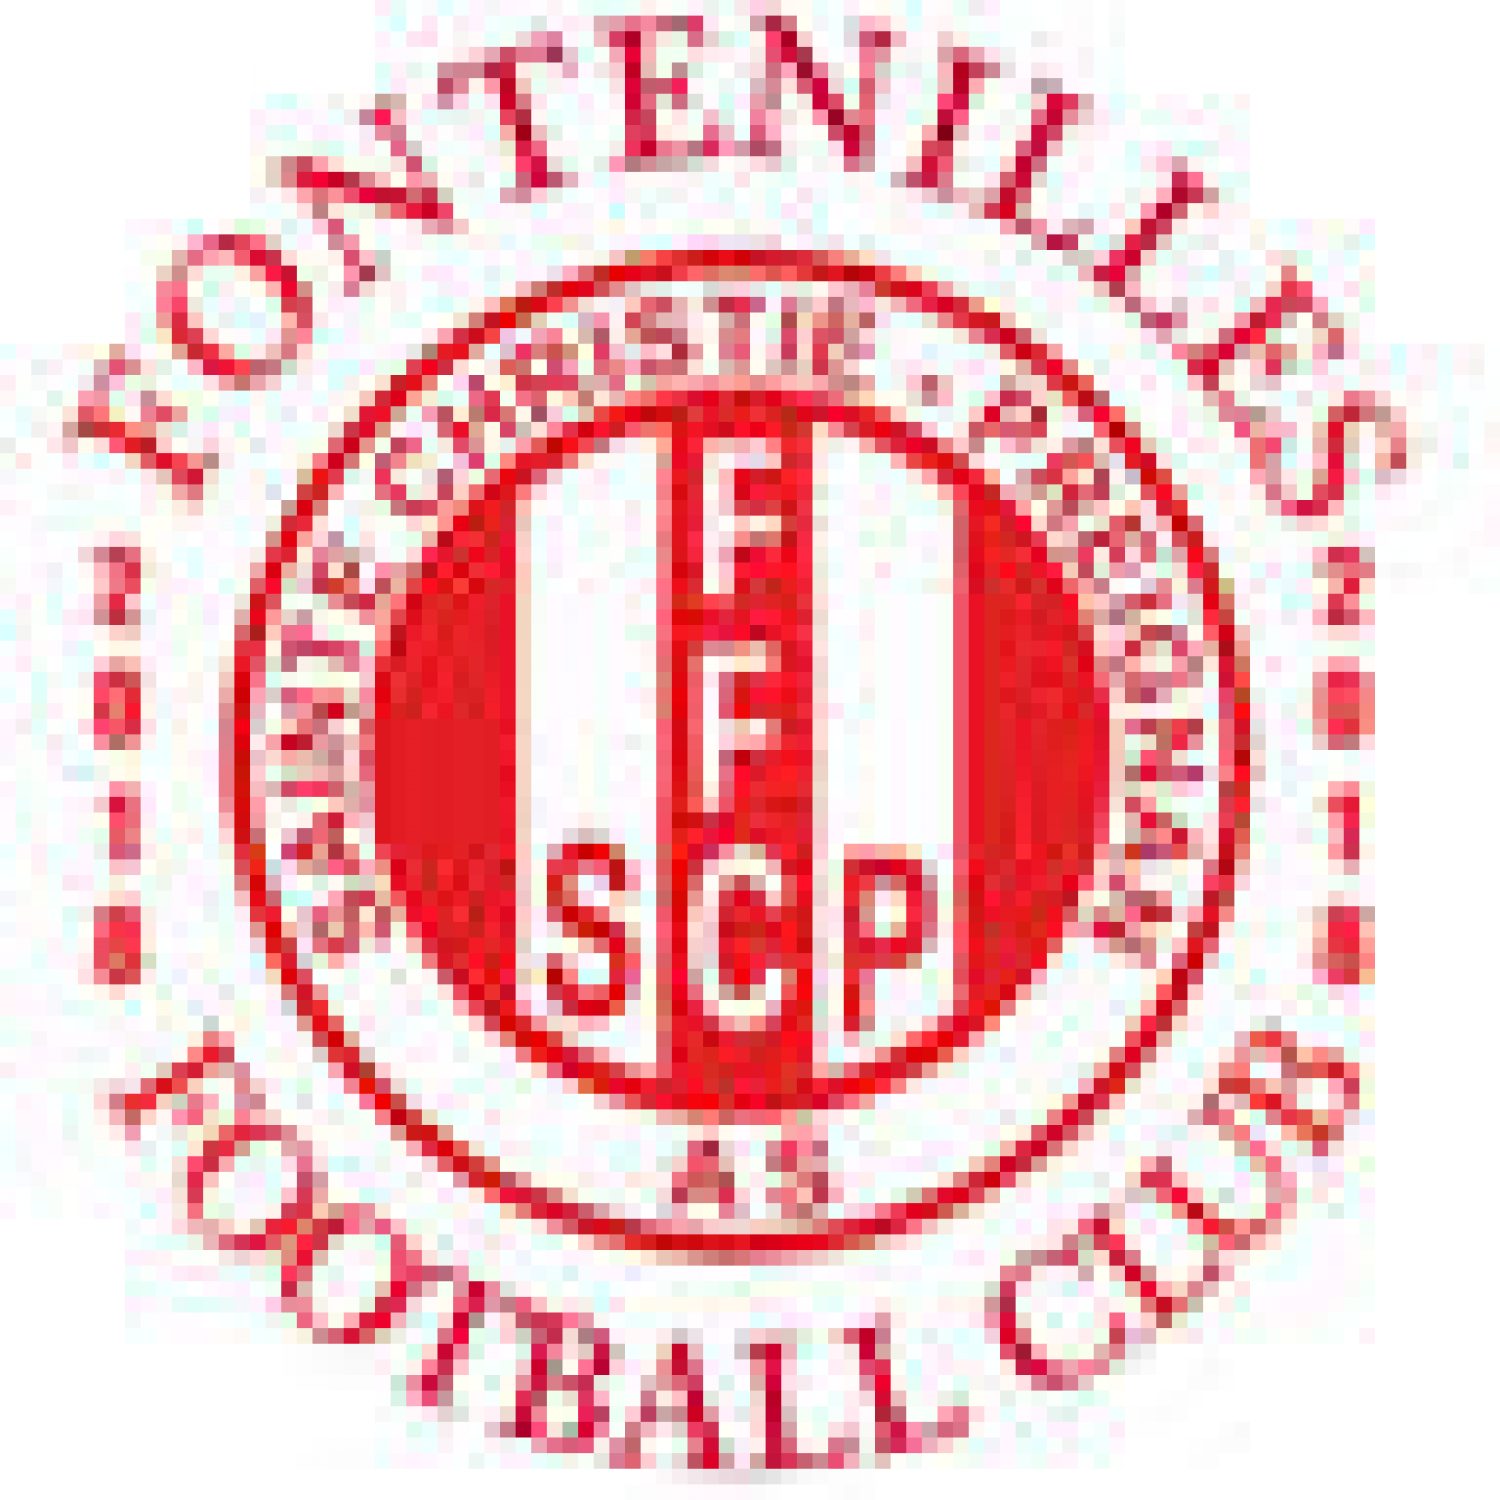 Logo FFC SCP